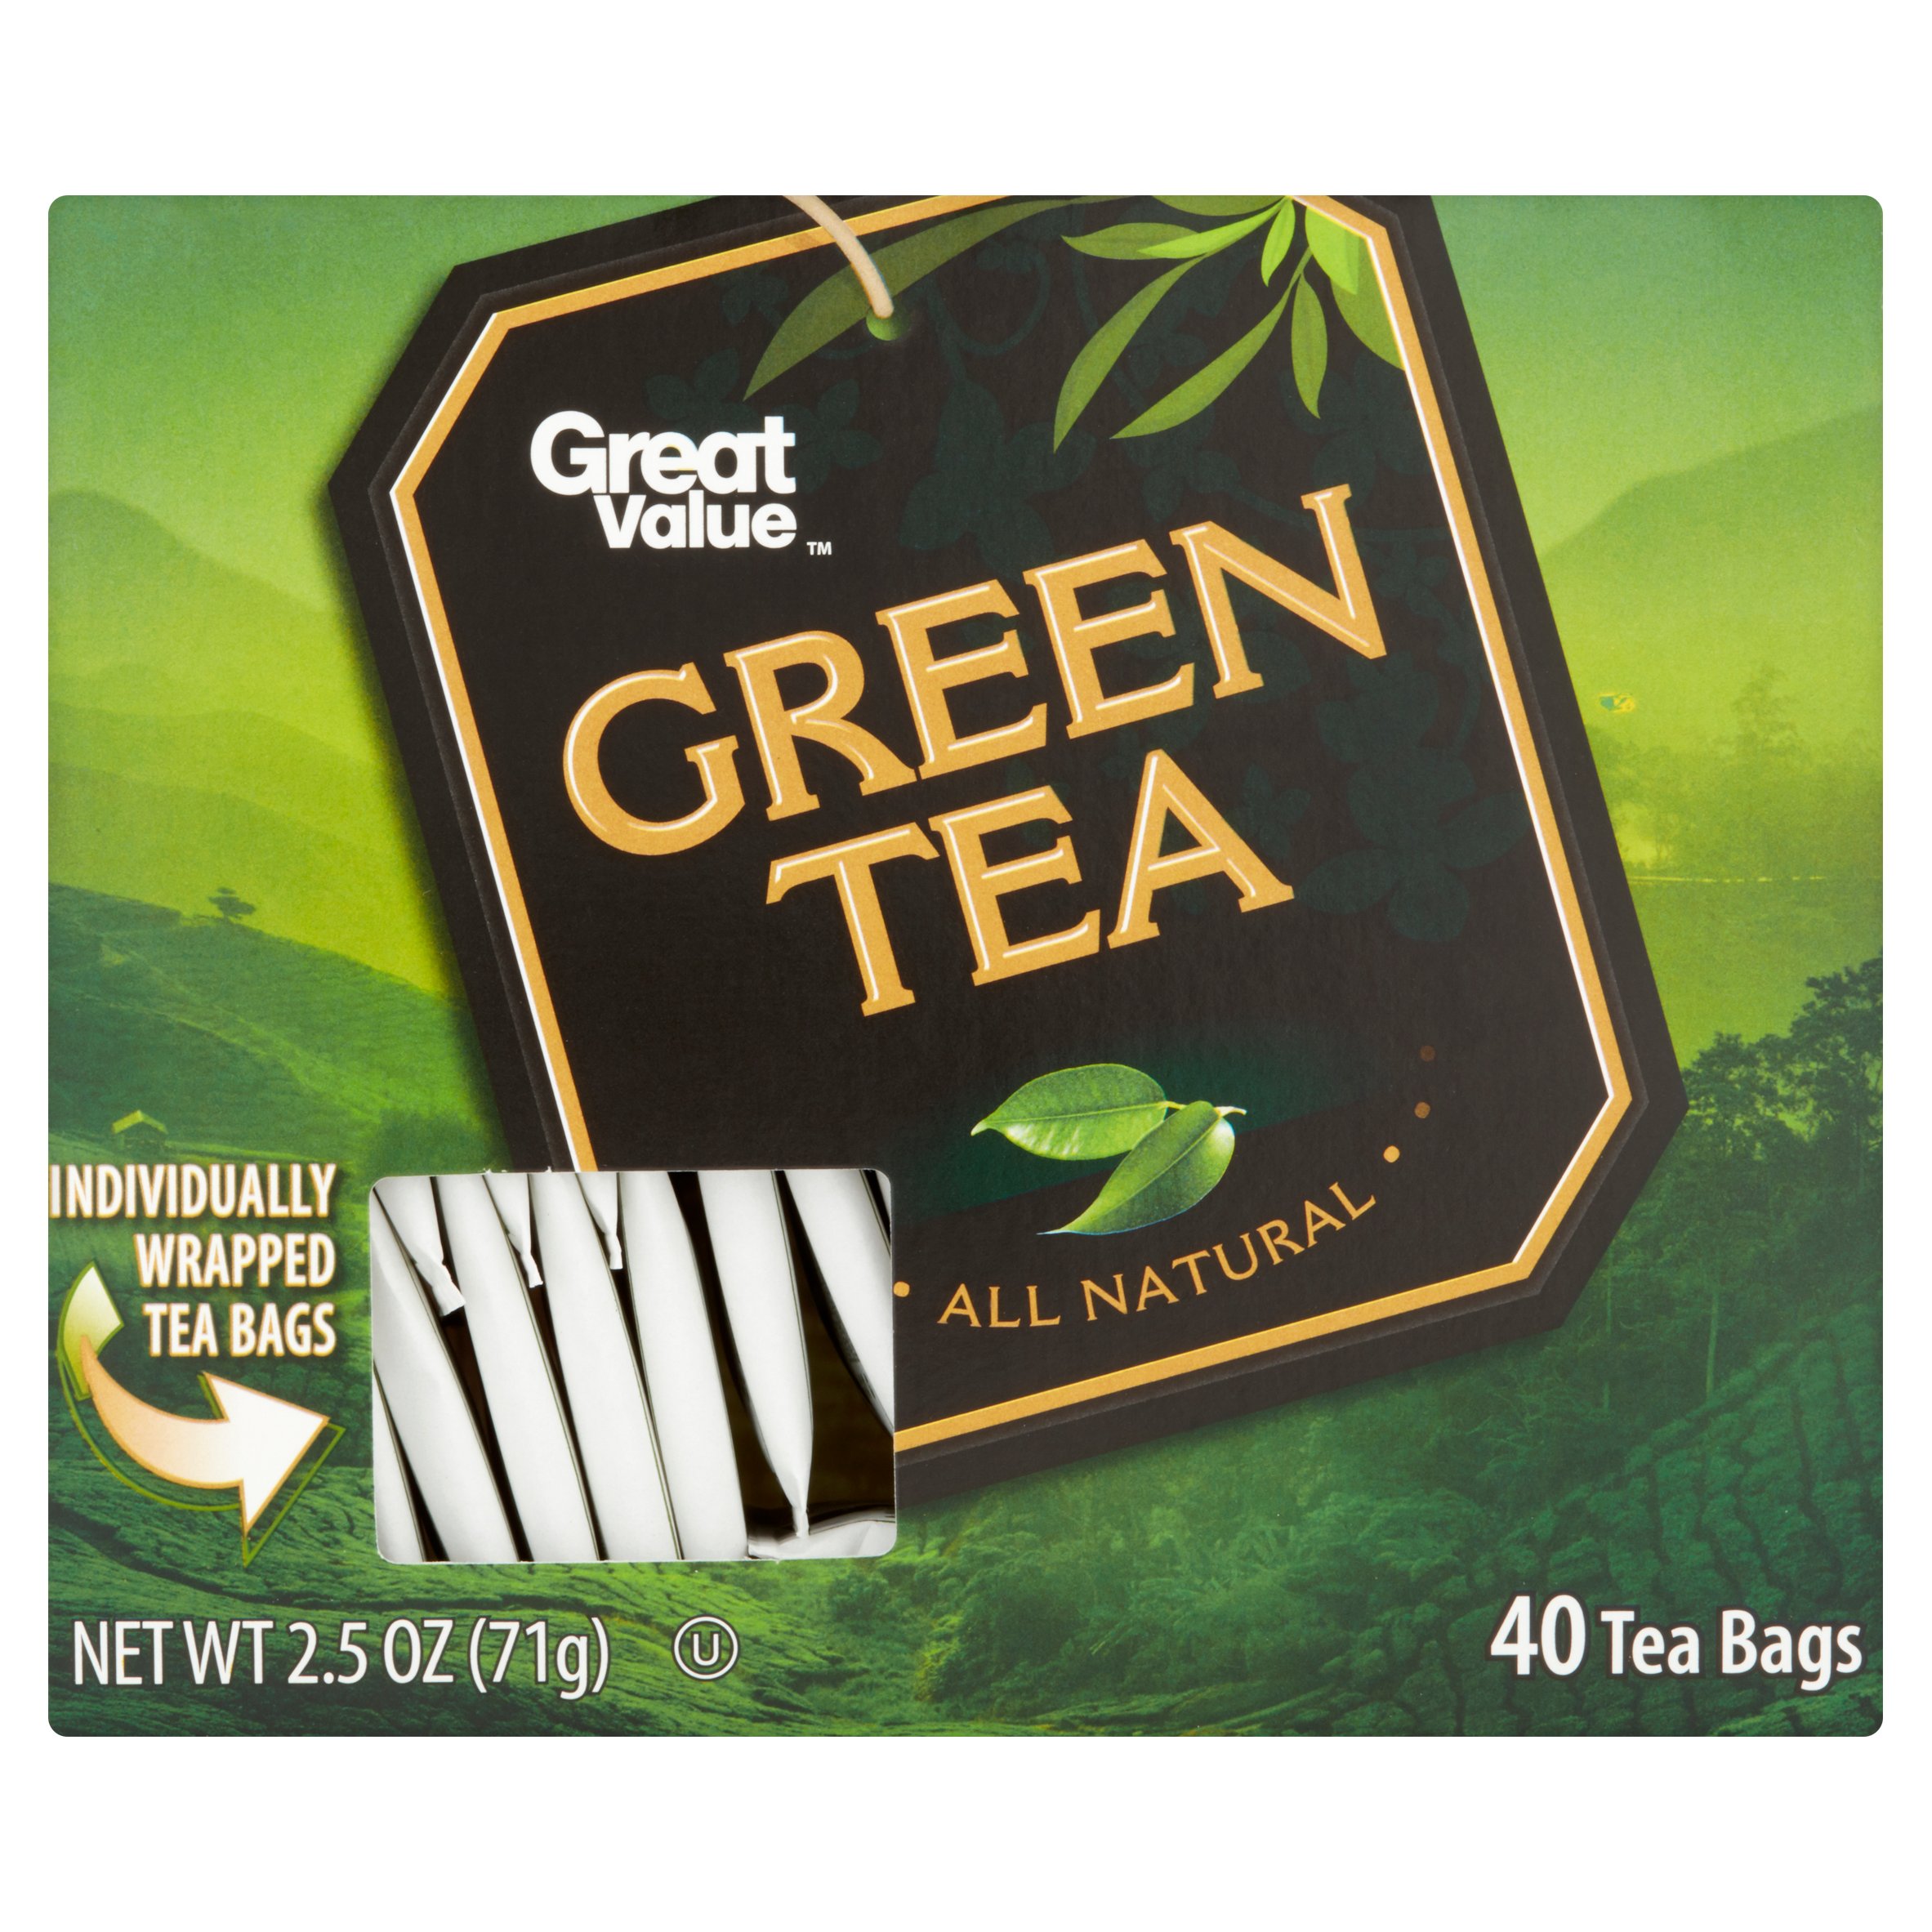 (4 Boxes) Great Value Green Tea, Tea Bags, 40 Count